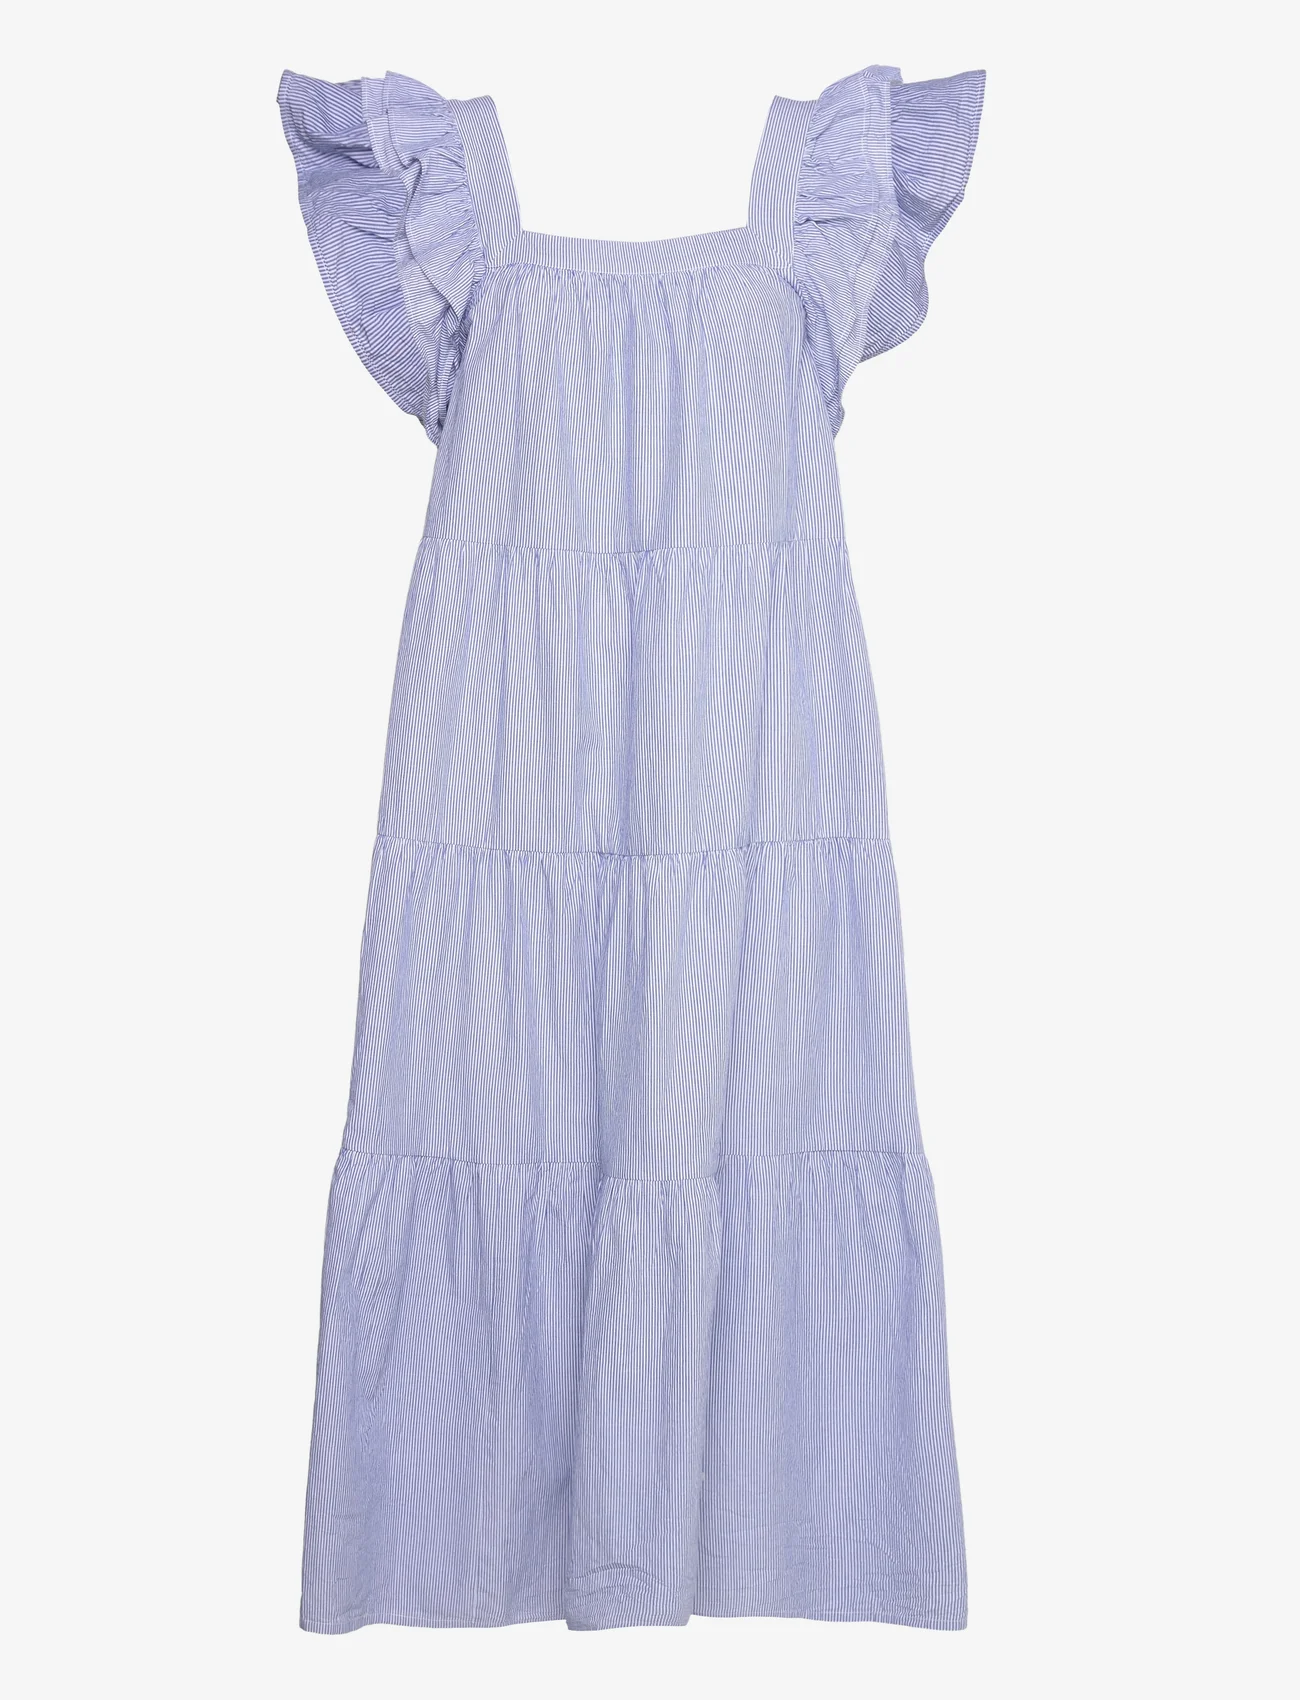 Sofie Schnoor - Dress - summer dresses - light blue striped - 0